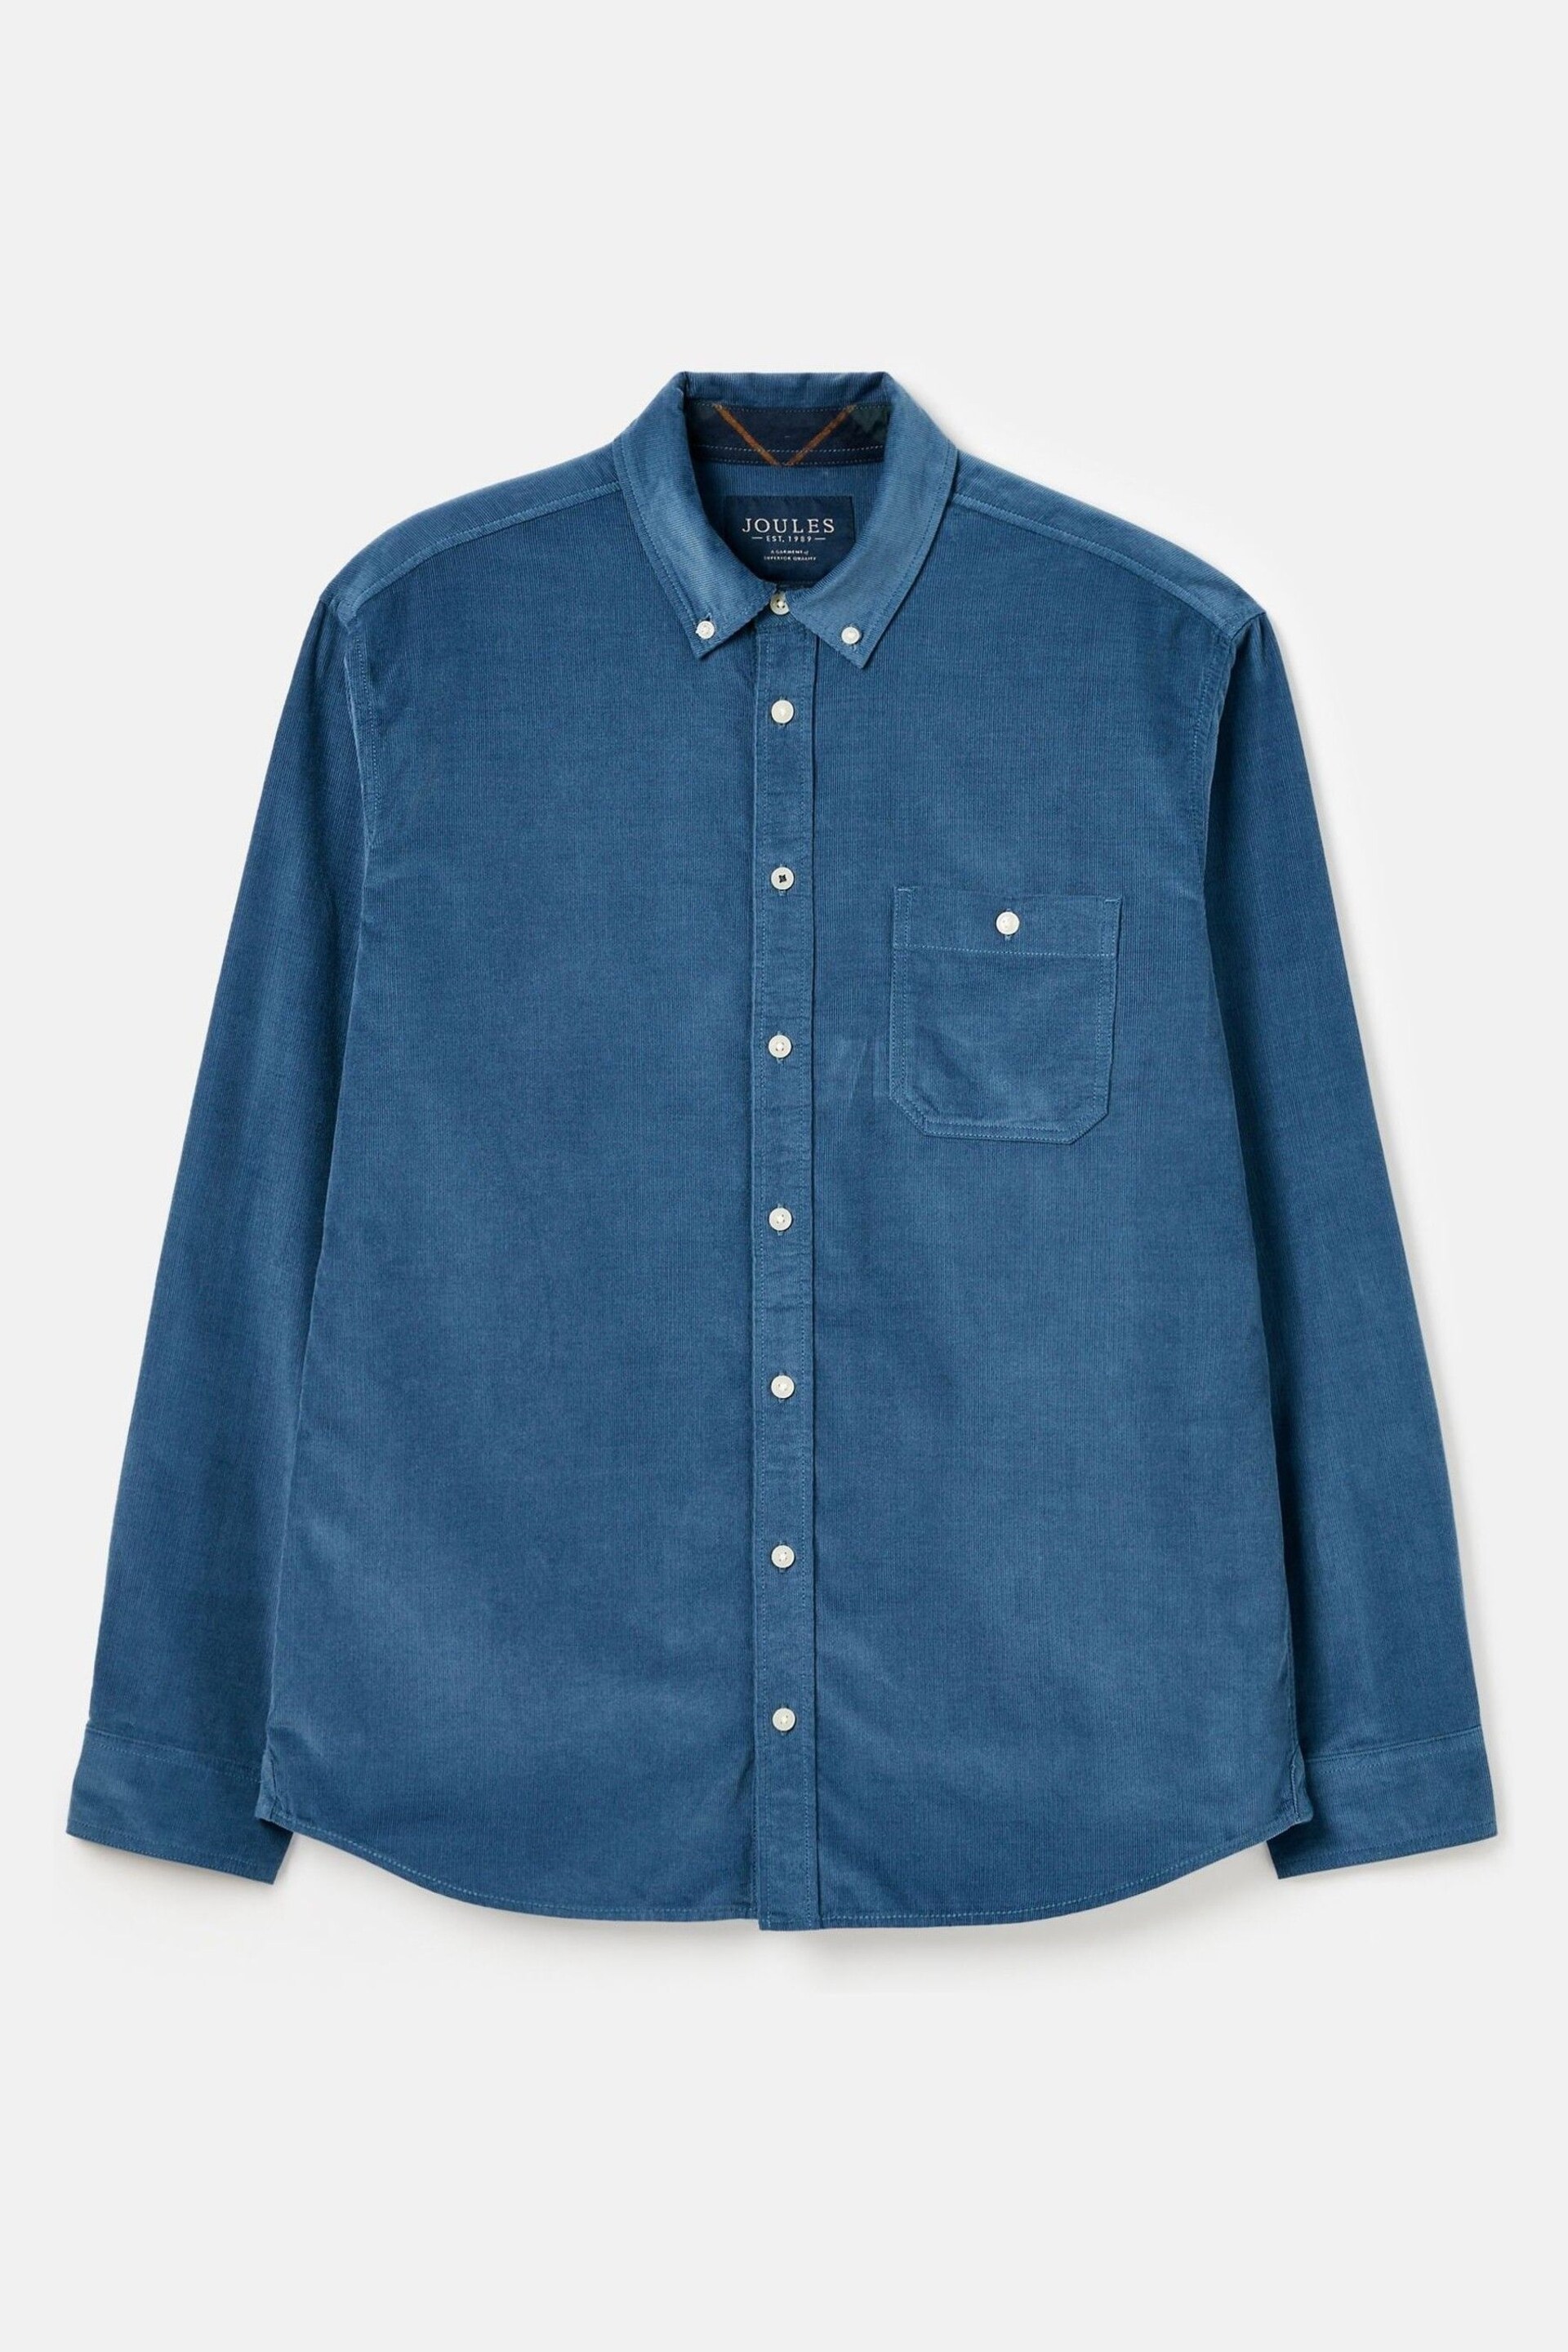 Joules Miller Blue Corduroy Shirt - Image 8 of 8